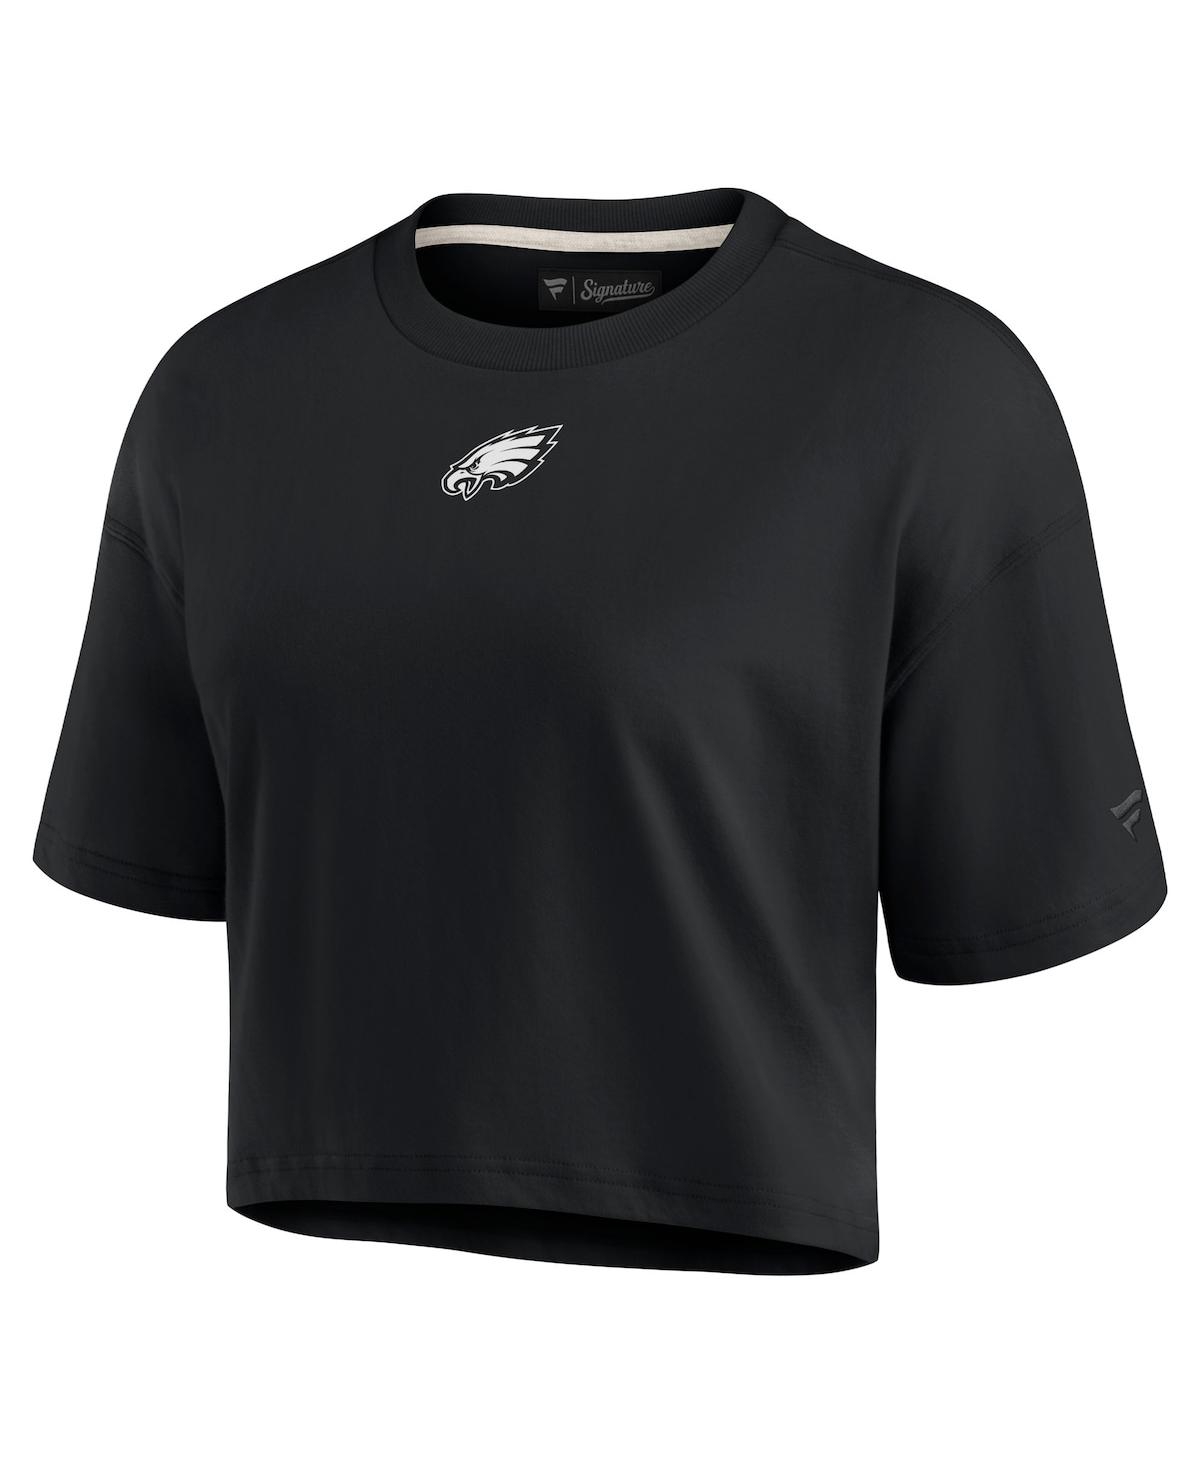 Shop Fanatics Signature Women's  Black Philadelphia Eagles Super Soft Boxy Short Sleeve Cropped T-shirt